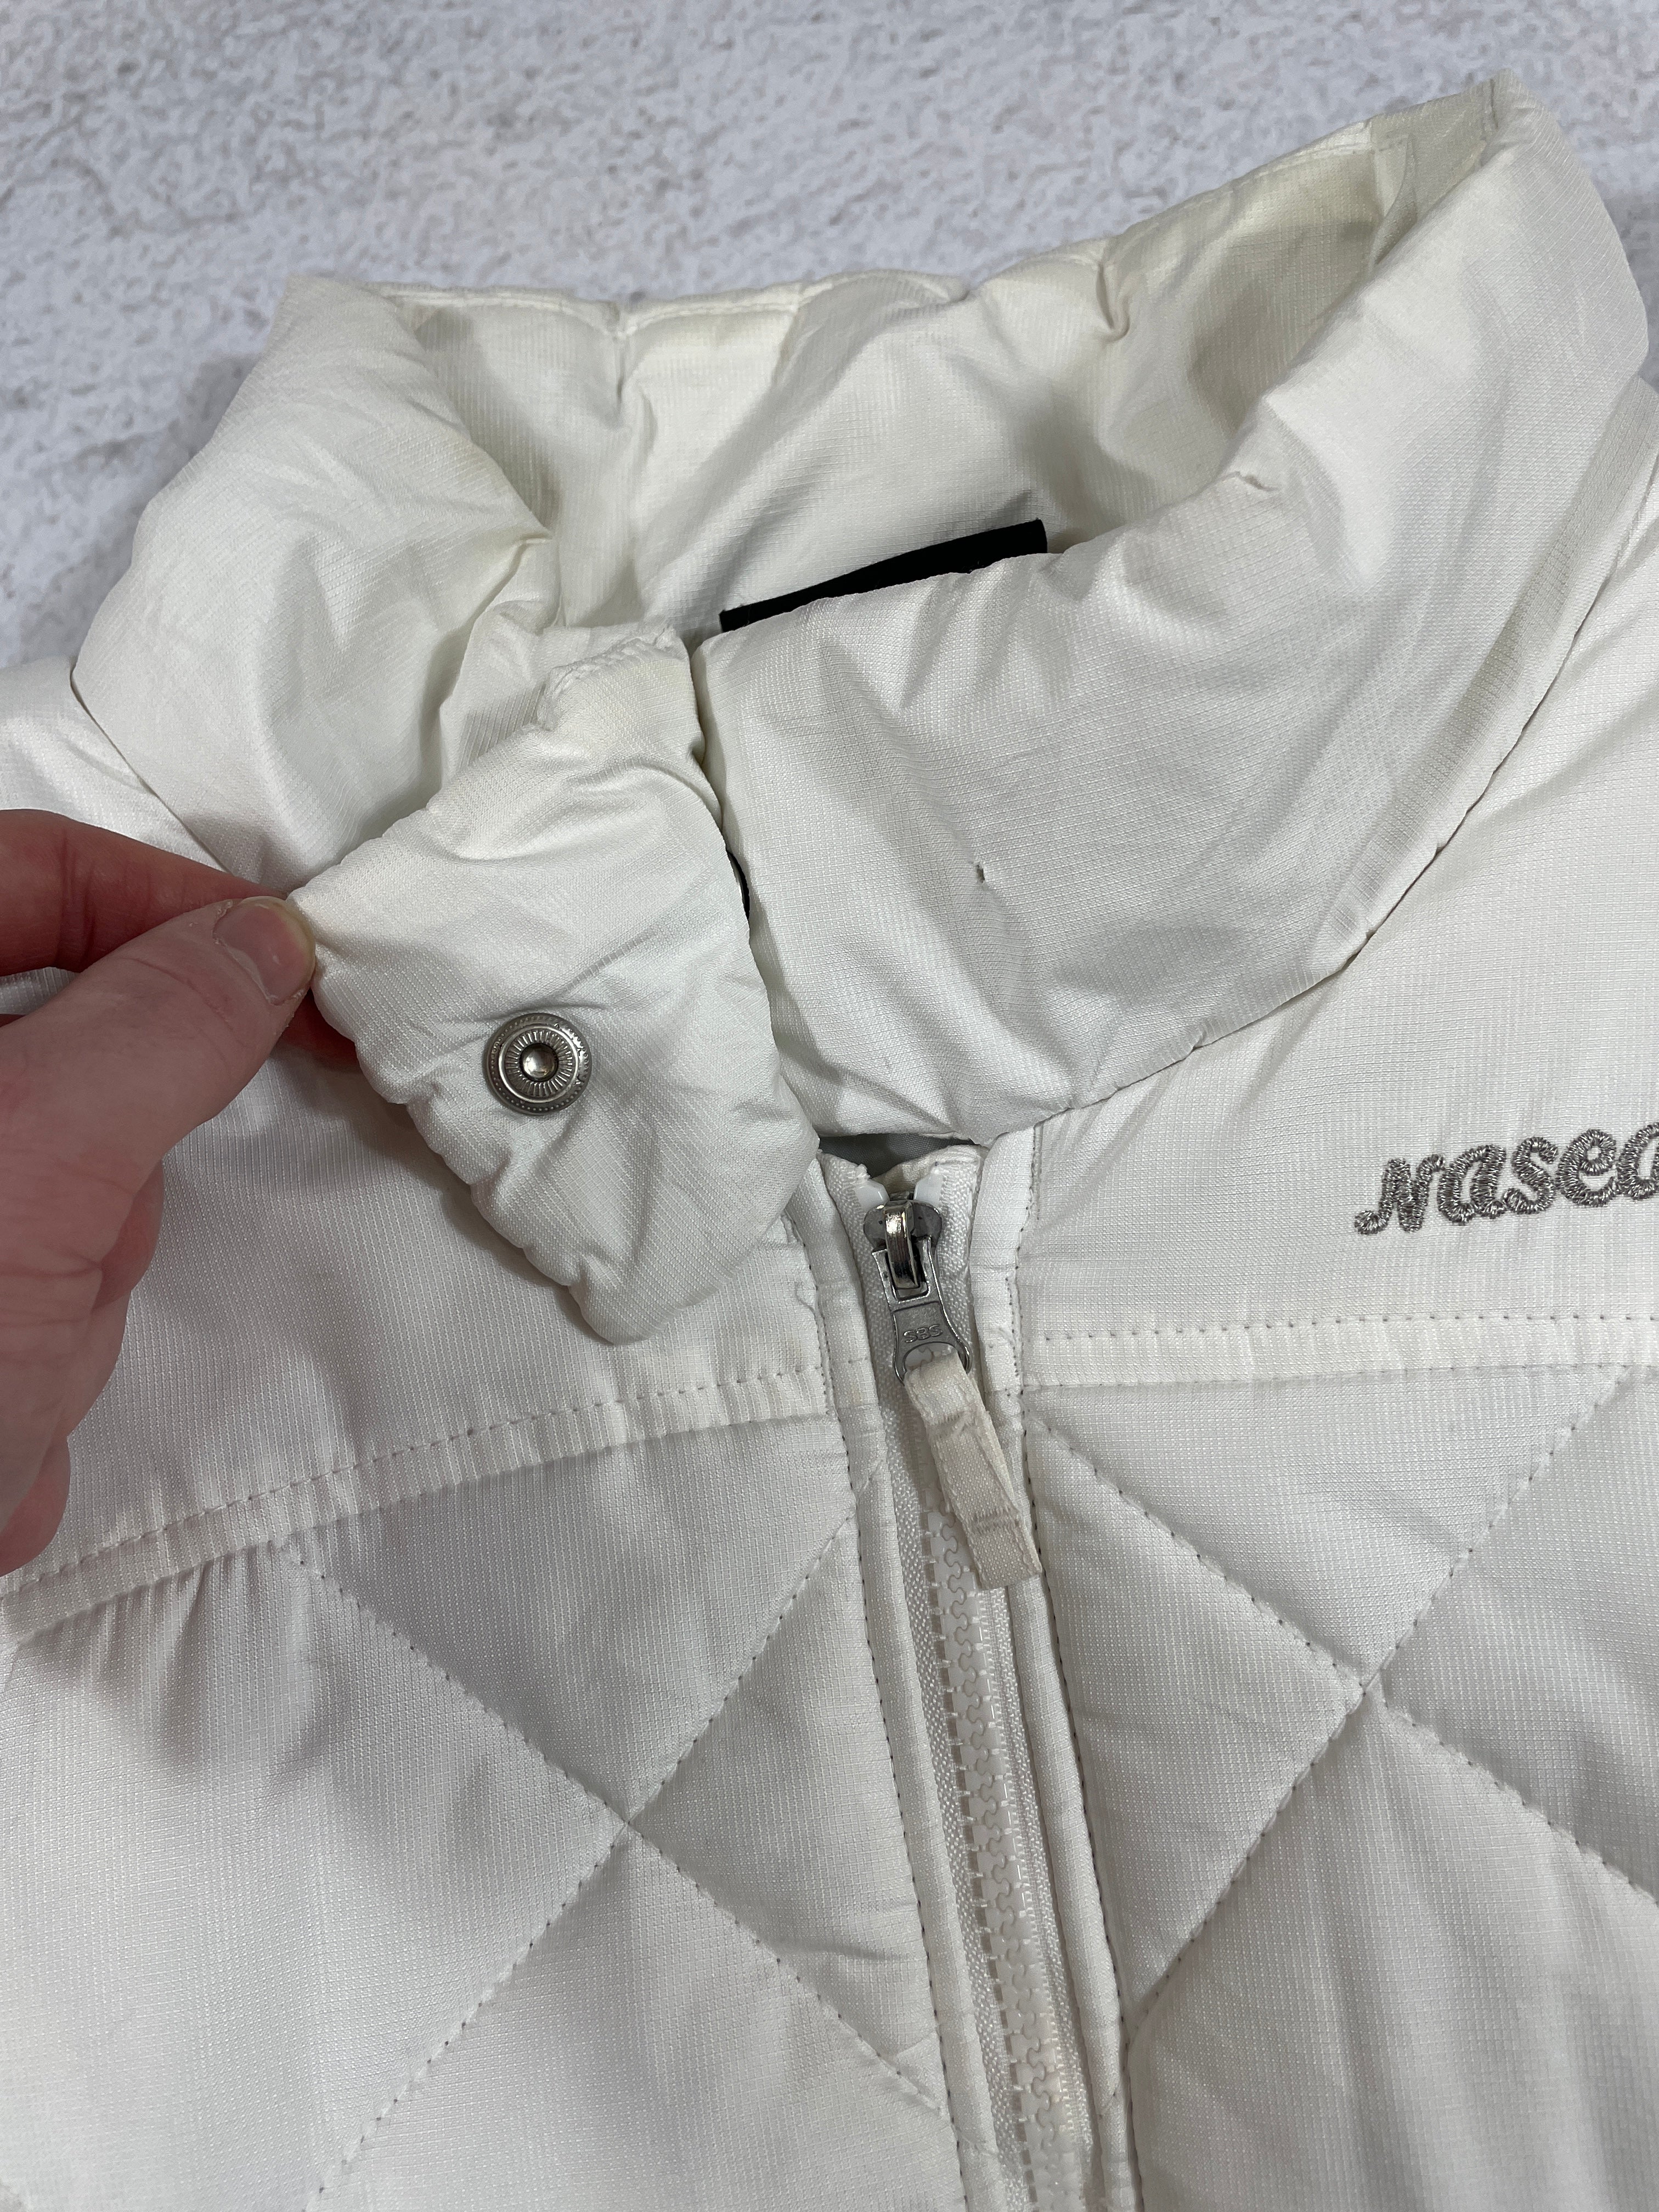 Vintage Nascar Insulated Jacket - Women's Large